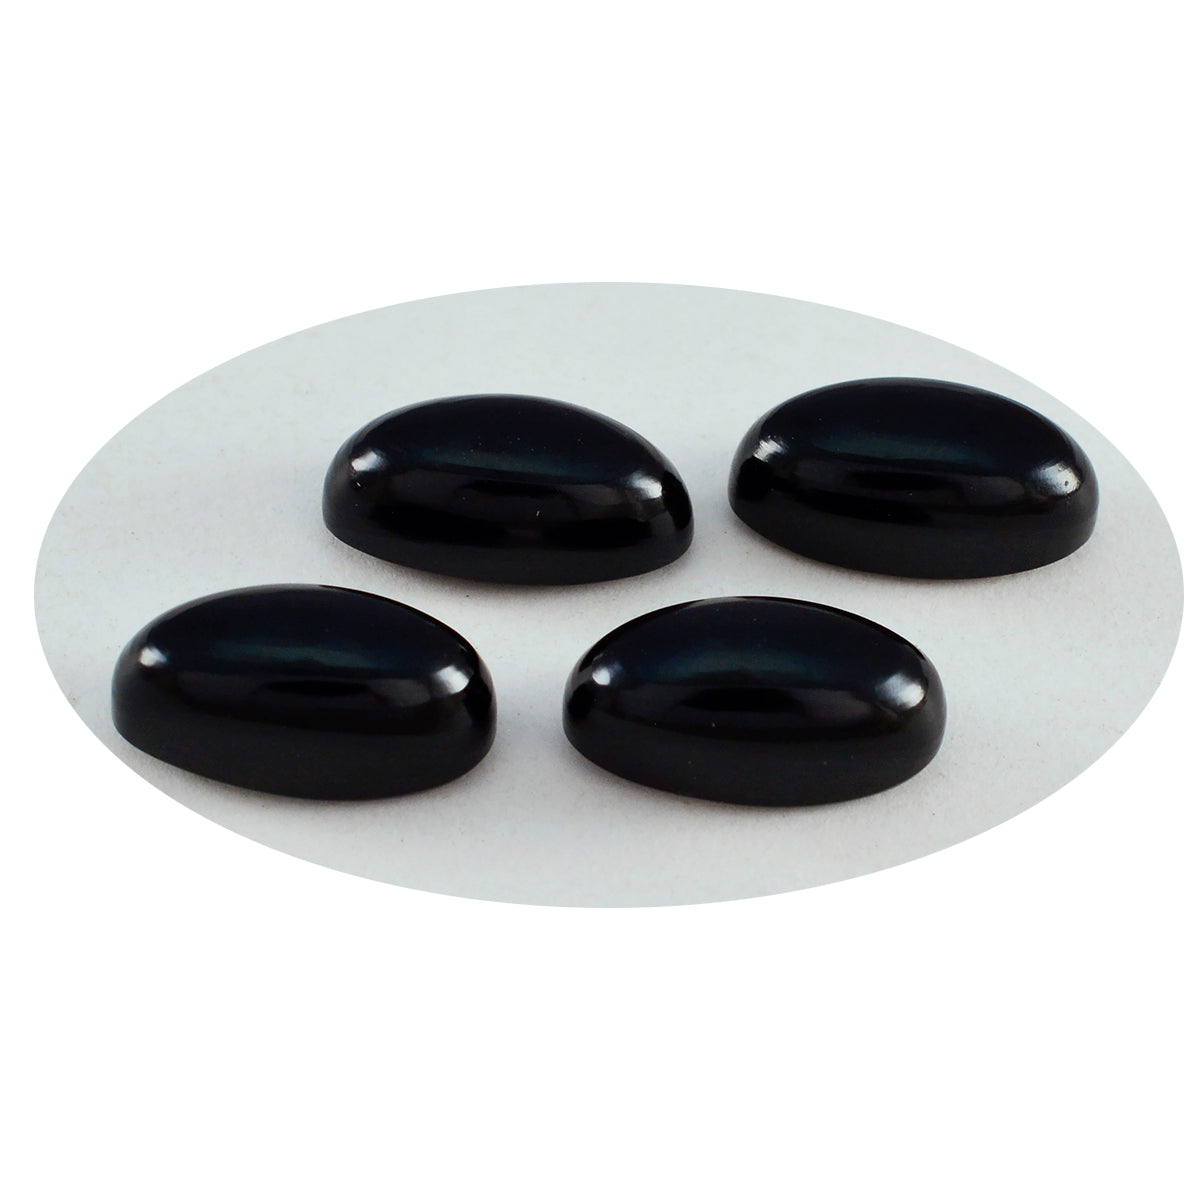 Riyogems 1PC Black Onyx Cabochon 7X14 mm ovale vorm mooie kwaliteit losse edelsteen